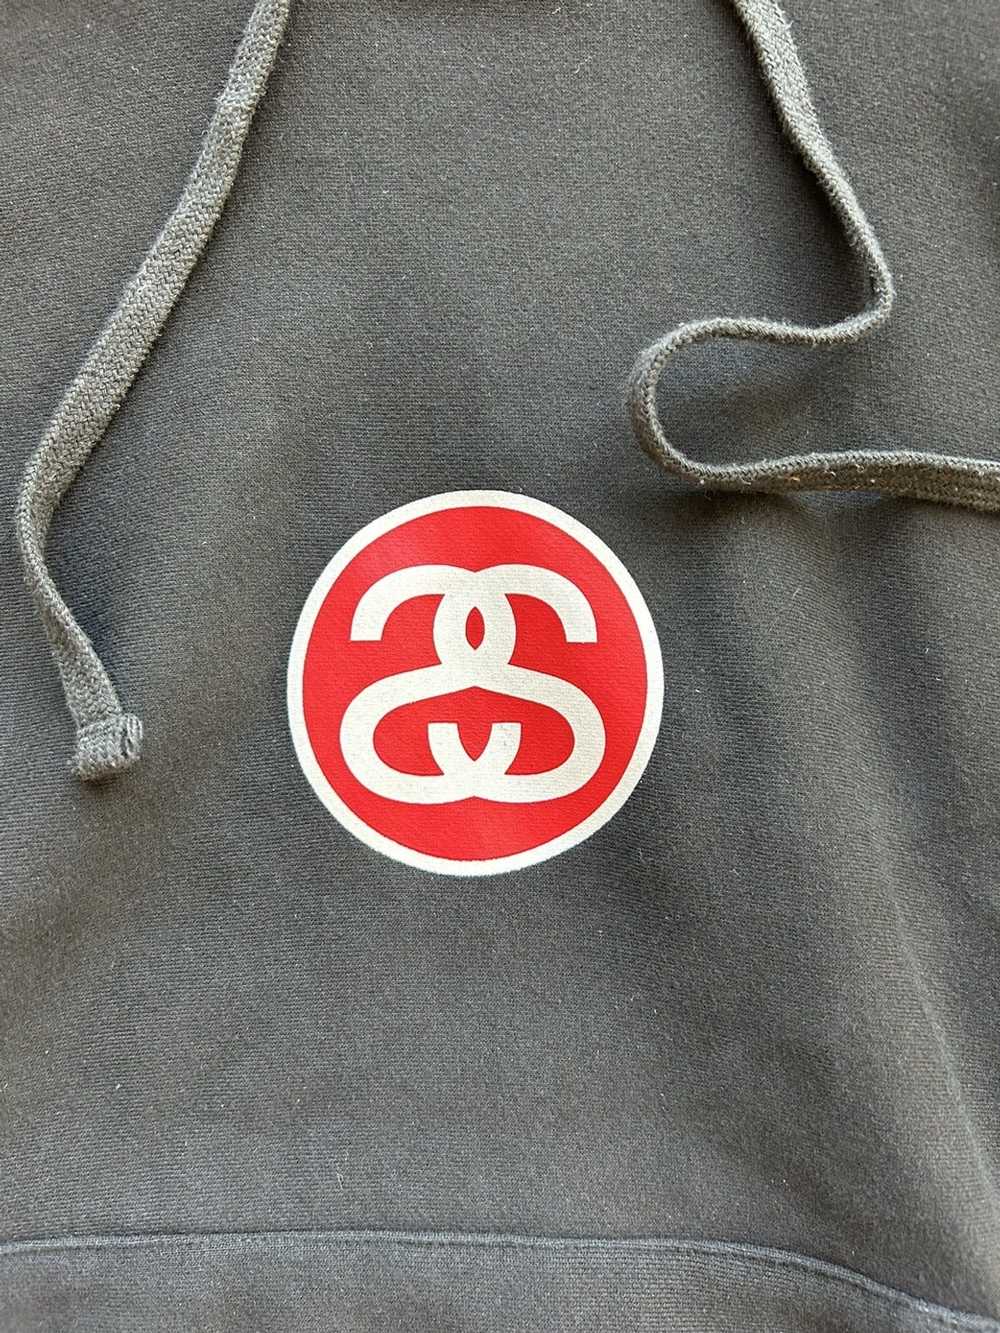 Stussy Stussy Chanel logo hoodie - image 2